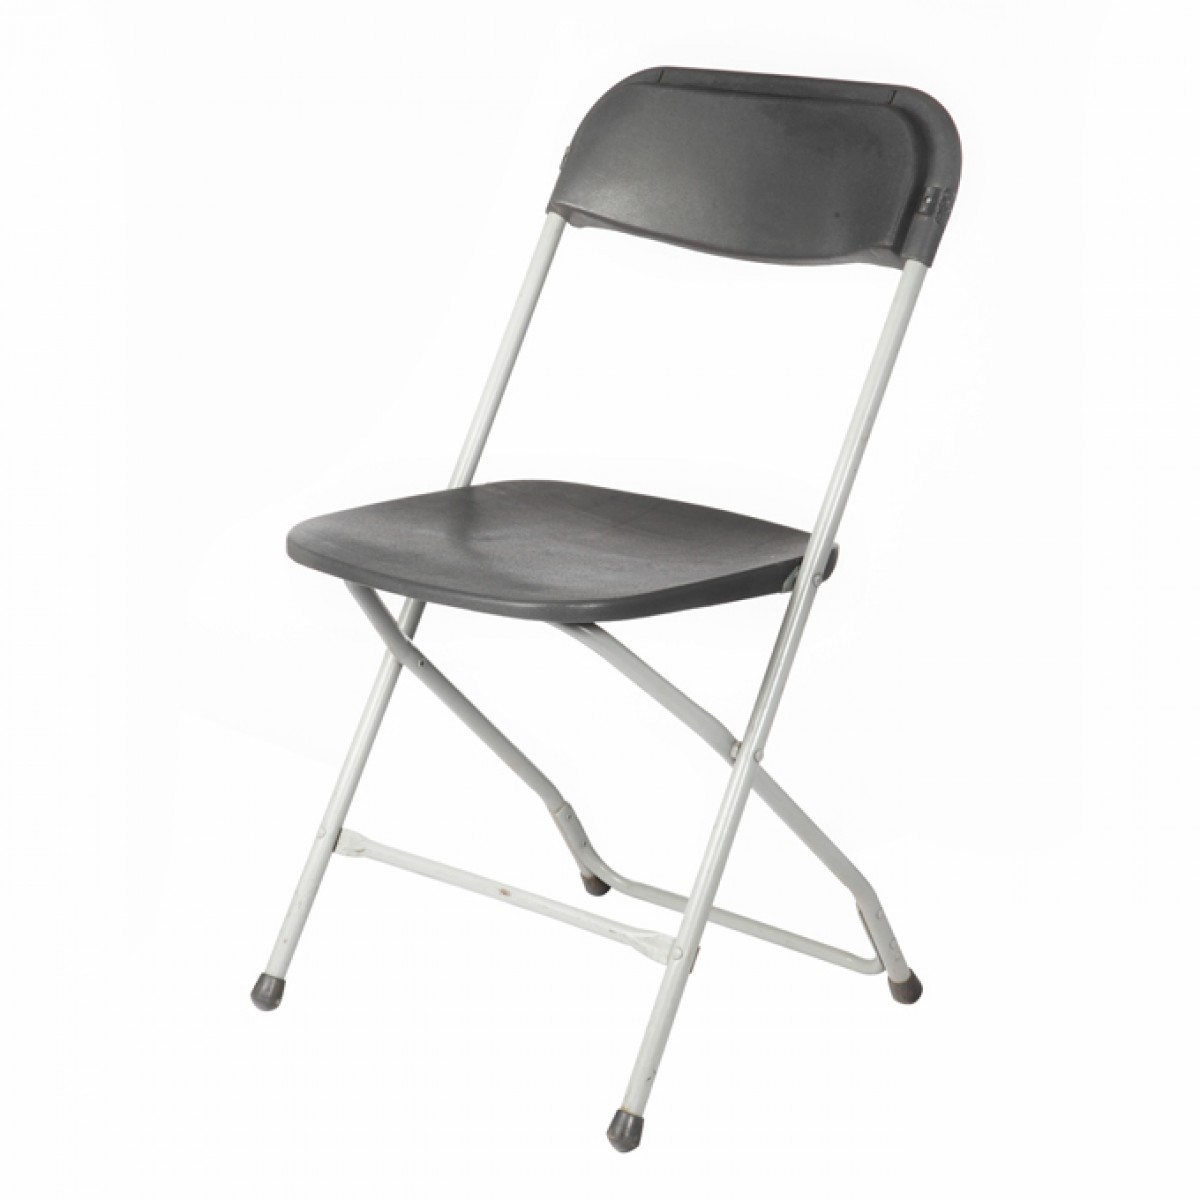 Charcoal folding chair